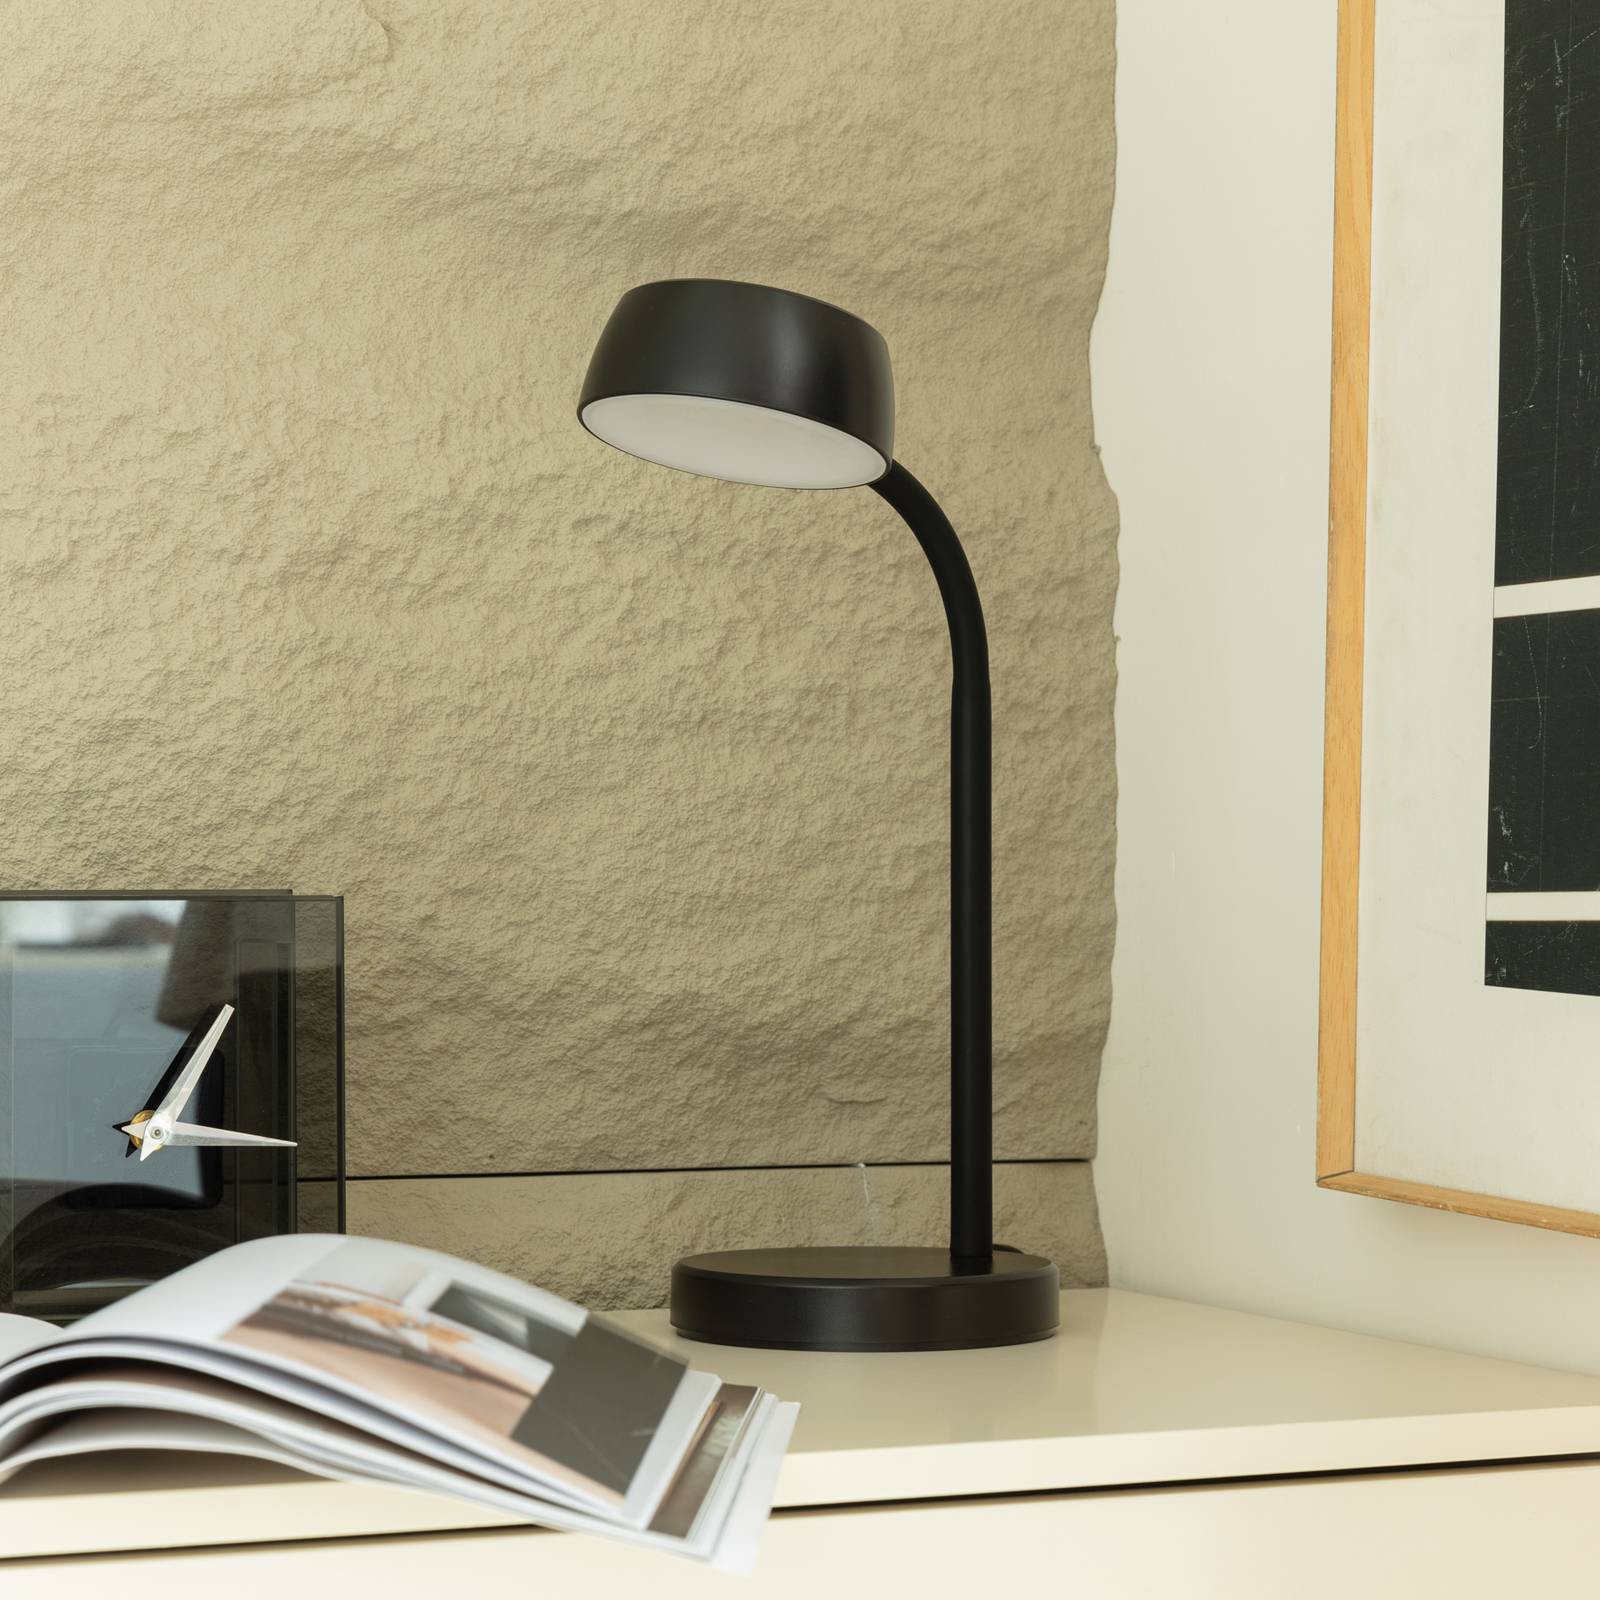 Lindby Tijan lampe de table LED, noir, bras flexible